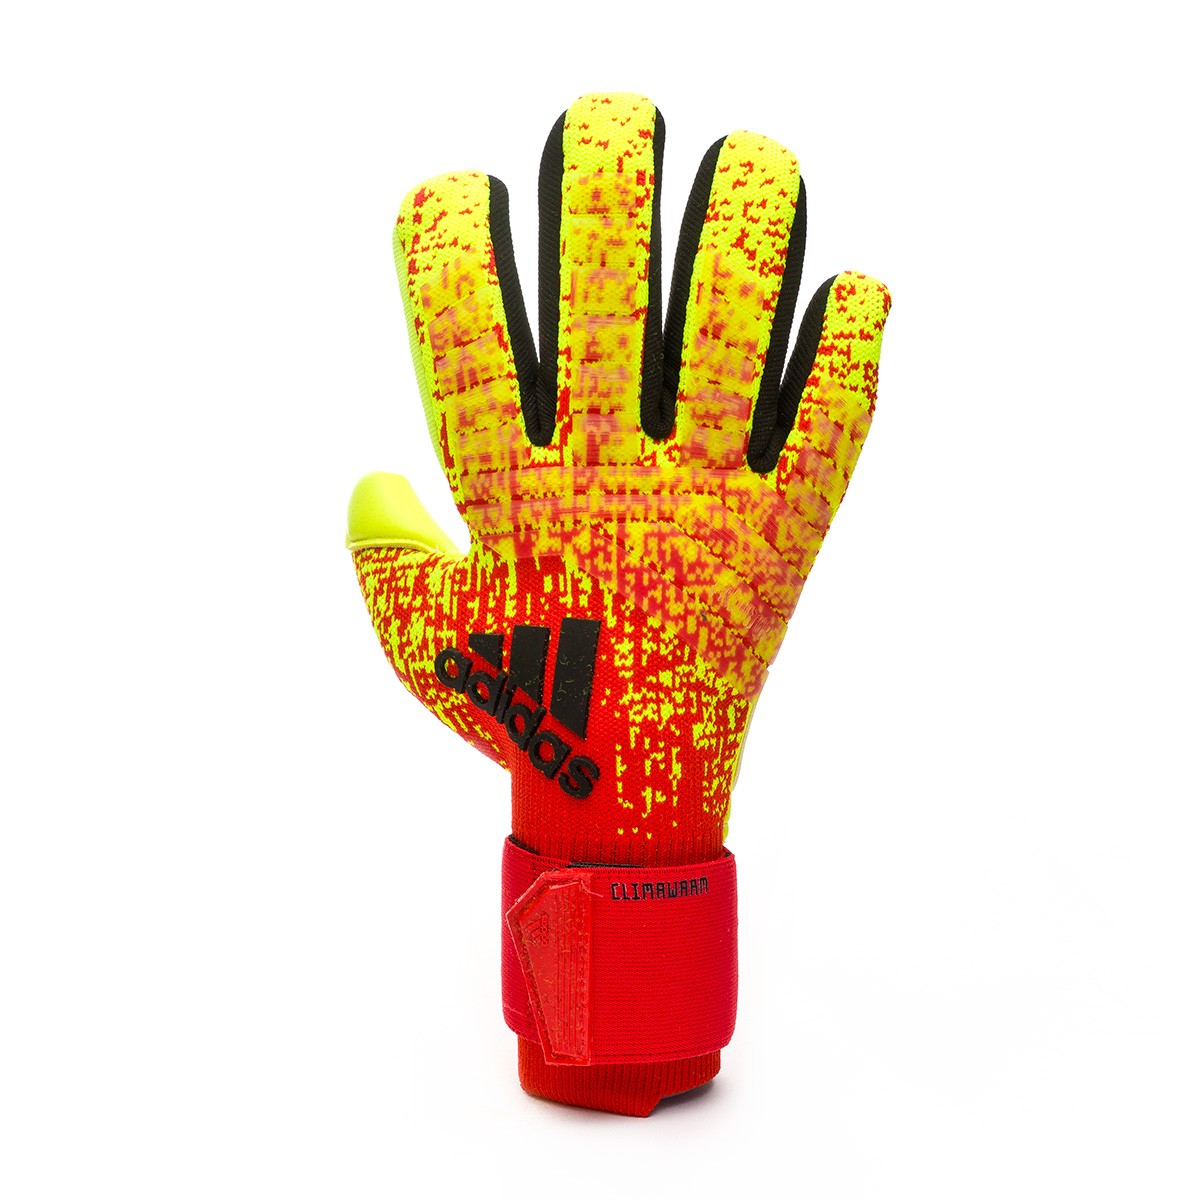 Glove adidas Predator Pro CW Solar yellow-Active red-Black - Fútbol Emotion